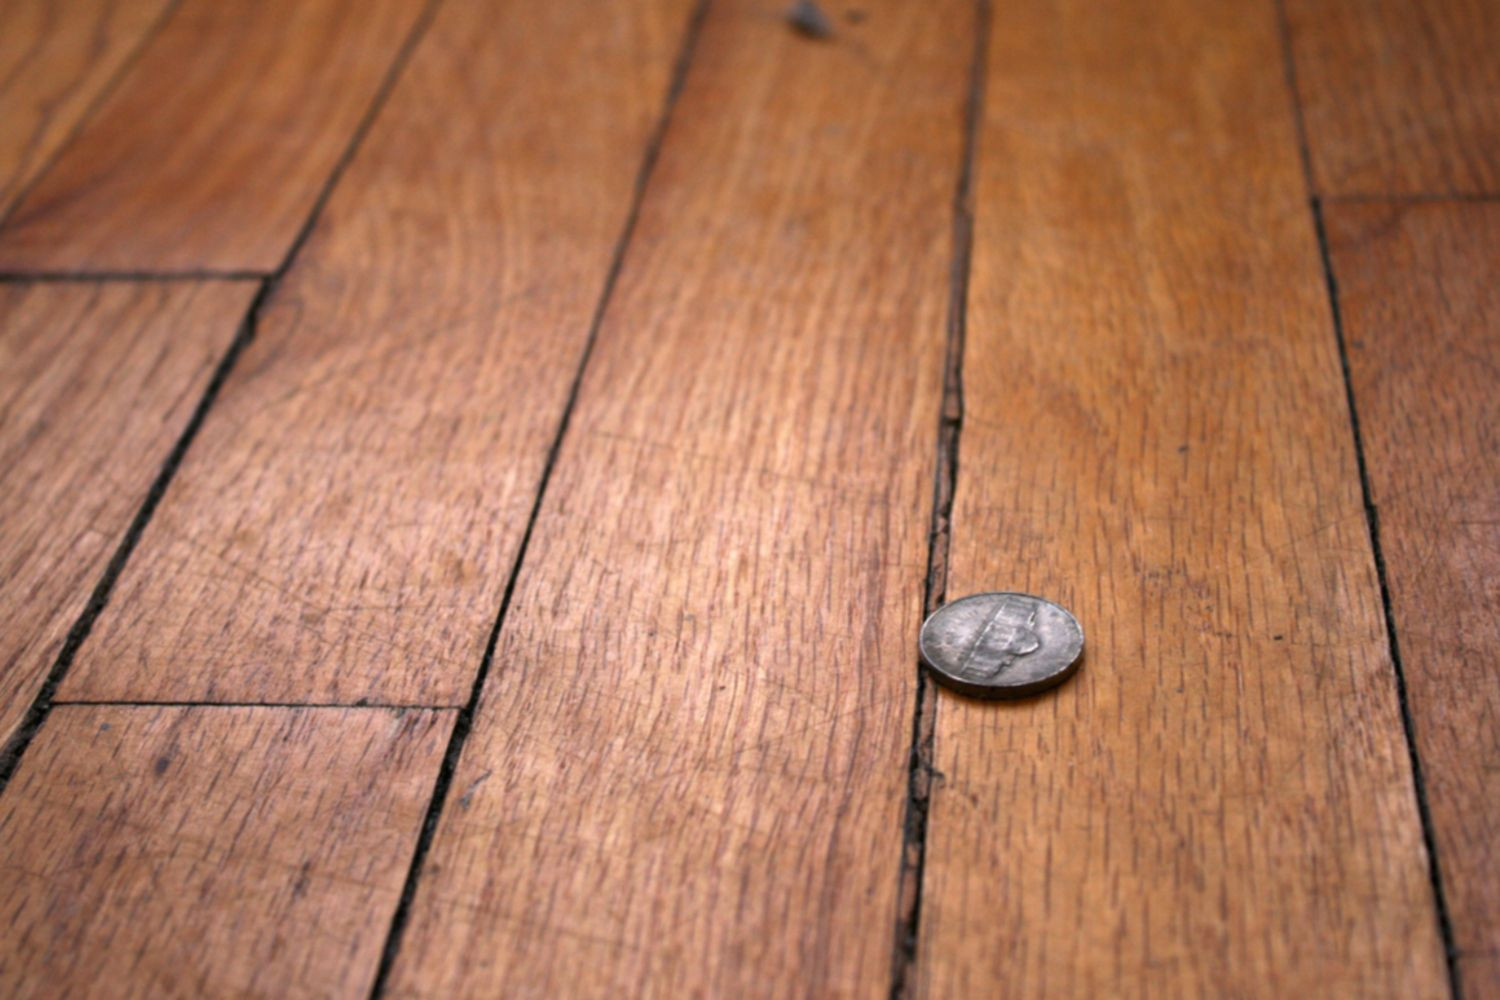 how to refinish hardwood floors with gaps of how to repair gaps between floorboards inside wood floor with gaps between boards 1500 x 1000 56a49eb25f9b58b7d0d7df8d